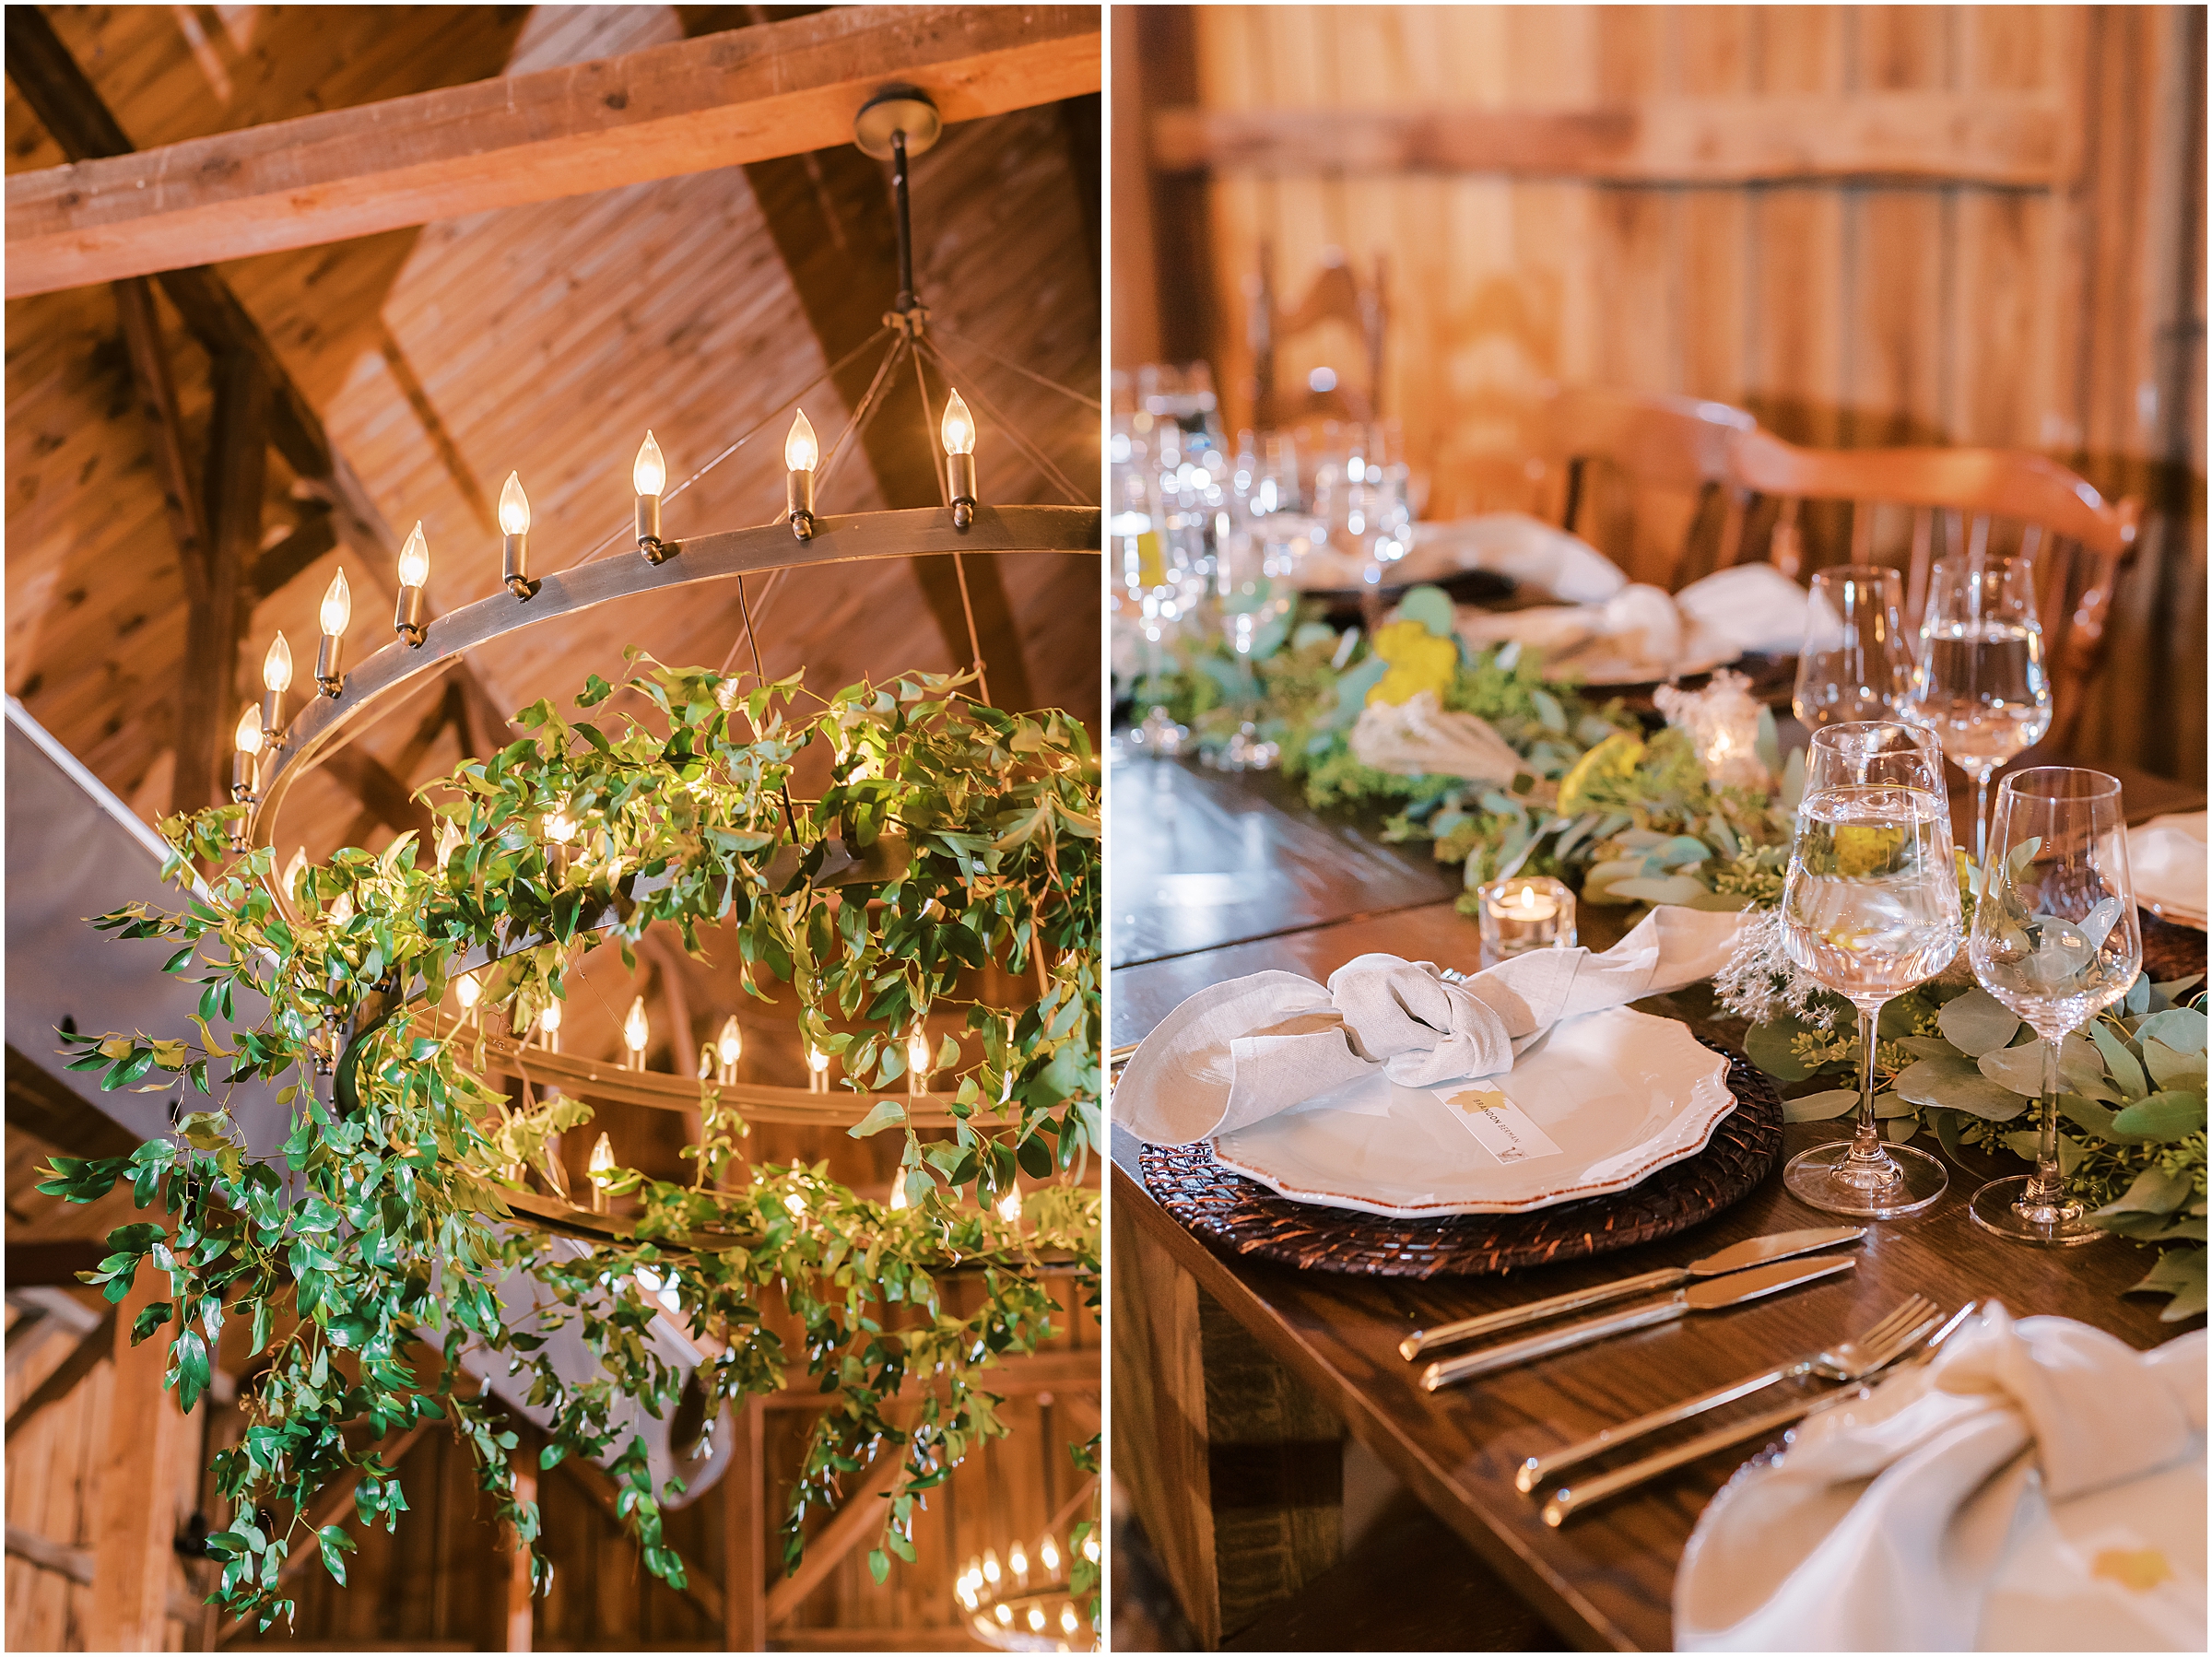 Wedding reception details in wooden barn